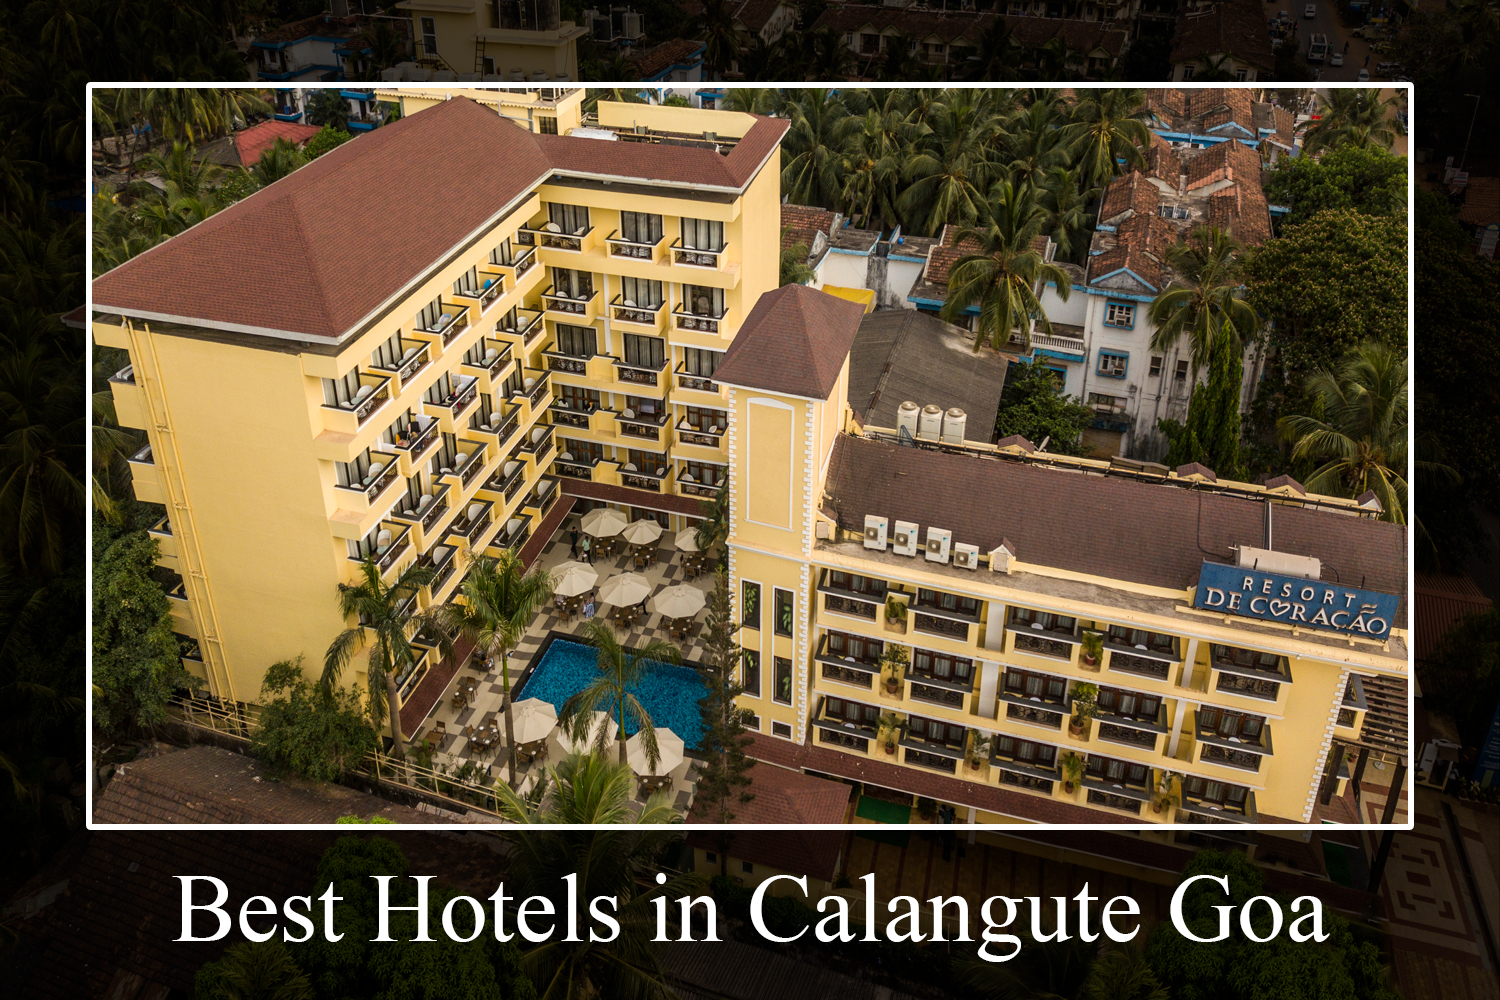 Unveiling the Oasis: Resort De CoraçÃo - One of the Best Hotels in Calangute, Goa